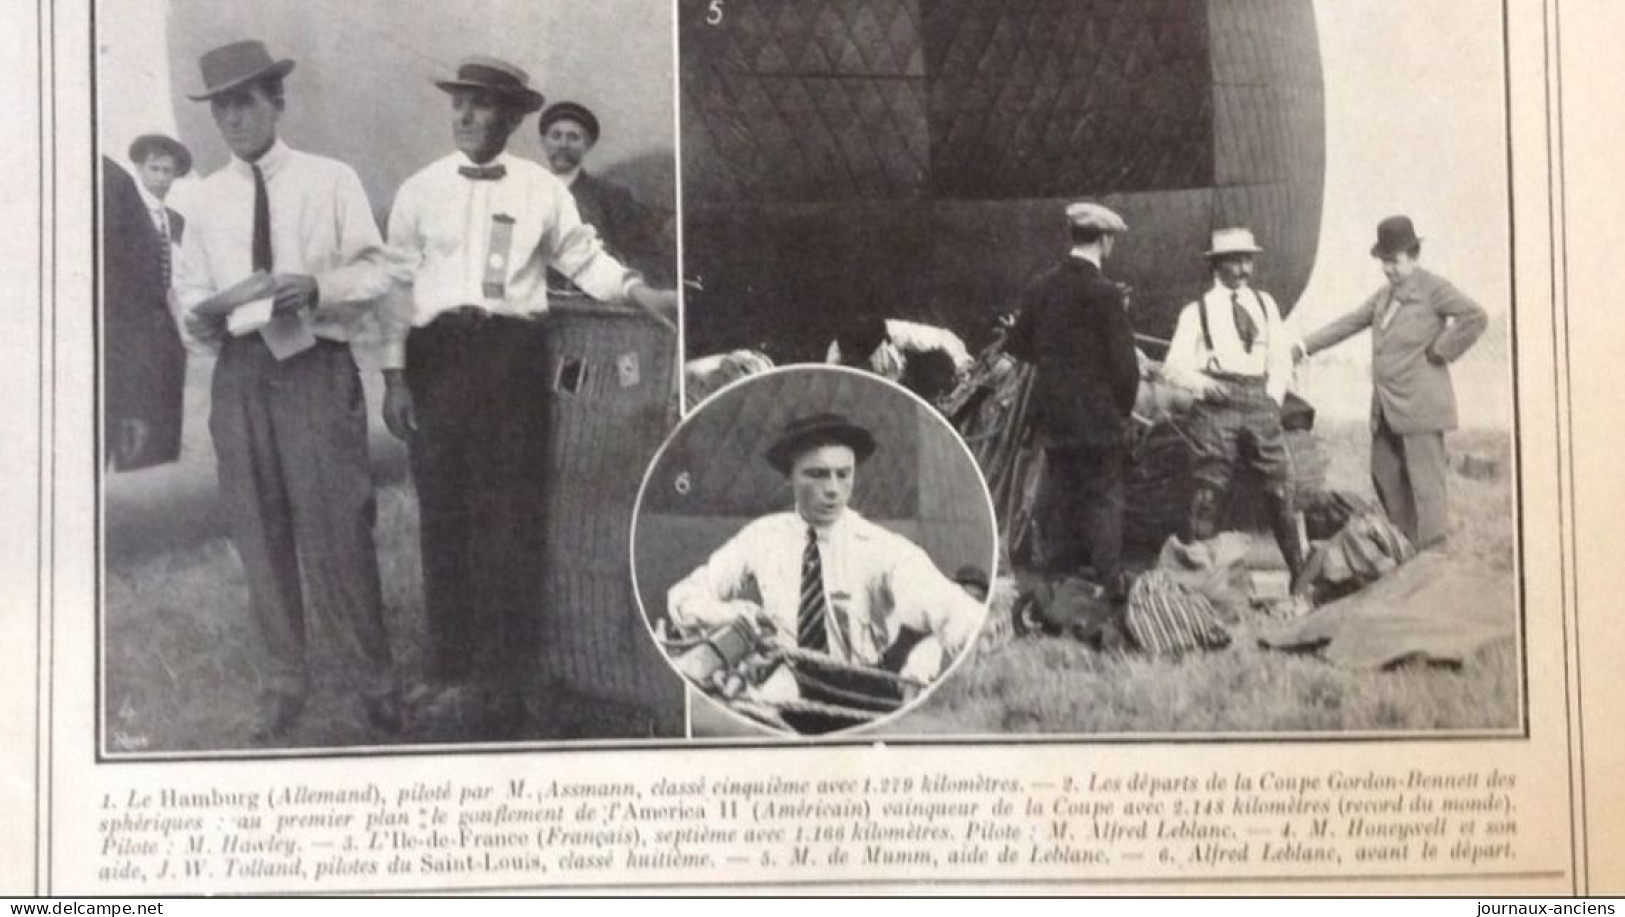 1910 LA COUPE GORDON BENNETT DE SPHÉRIQUES - L'AMERICA II - HONEYWELL - ALFRED LEBLANC - LA VIE AU GRAND AIR - 1900 - 1949